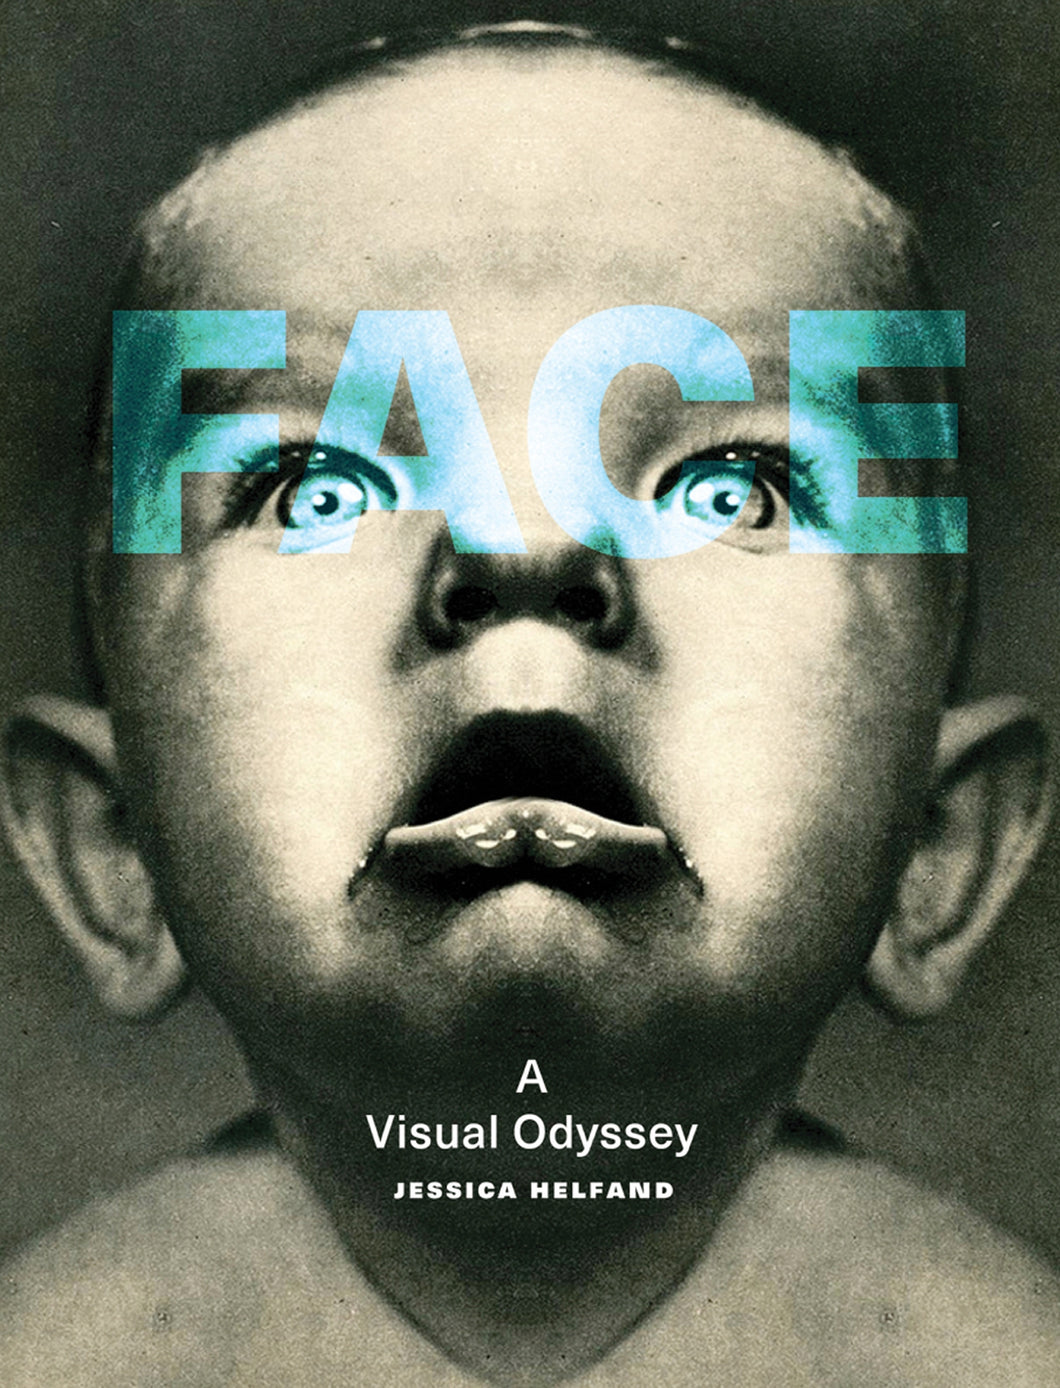 Face : A Visual Odyssey ร้านหนังสือและสิ่งของ เป็นร้านหนังสือภาษาอังกฤษหายาก และร้านกาแฟ หรือ บุ๊คคาเฟ่ ตั้งอยู่สุขุมวิท กรุงเทพ